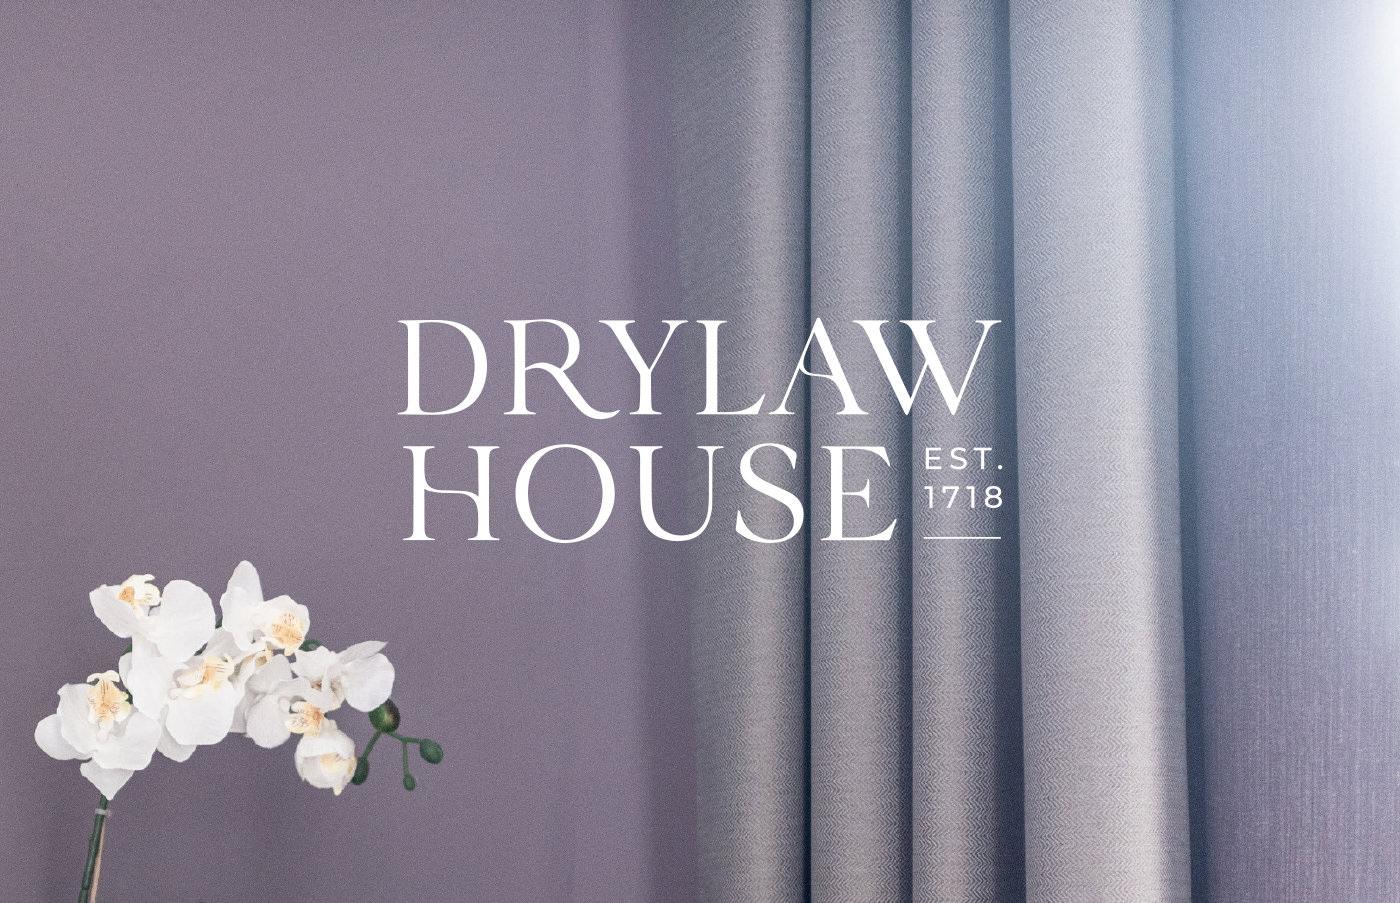 The Drylaw House identity